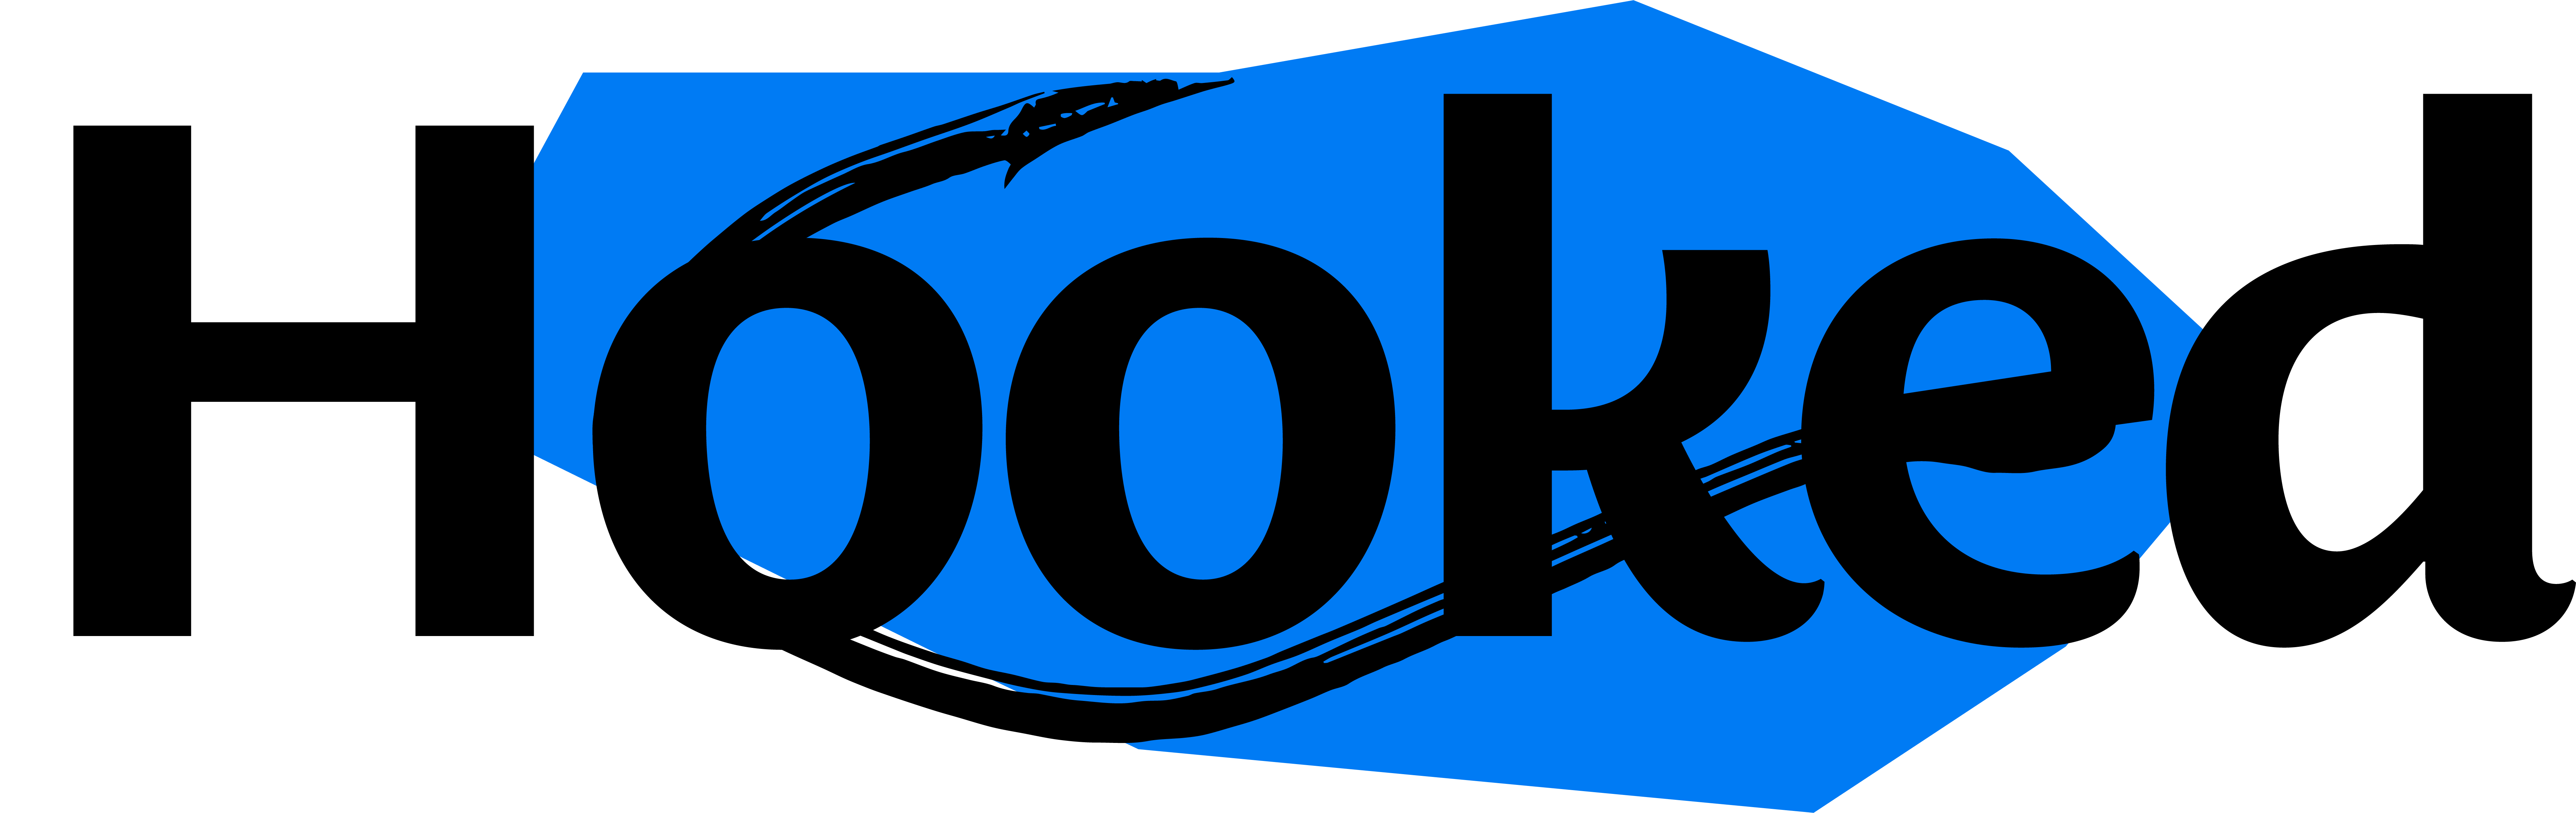 hooked logo